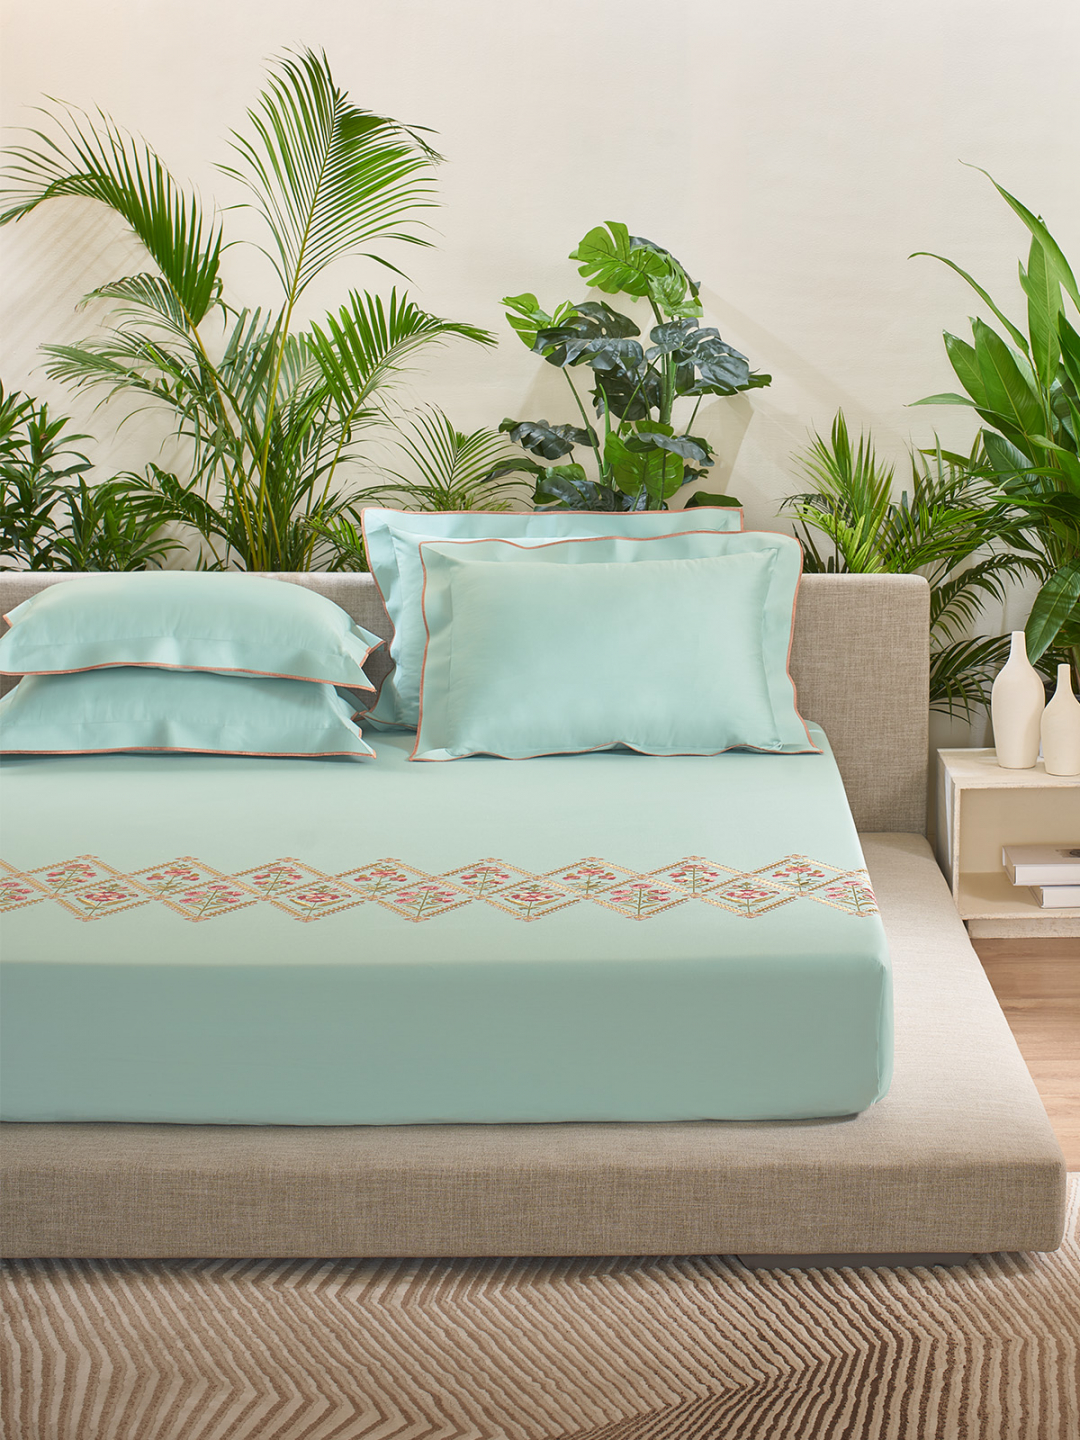 Top-selling item] Hermes Paris Luxury Brand Type 44 Home Decor Duvet Cover Bedroom  Sets